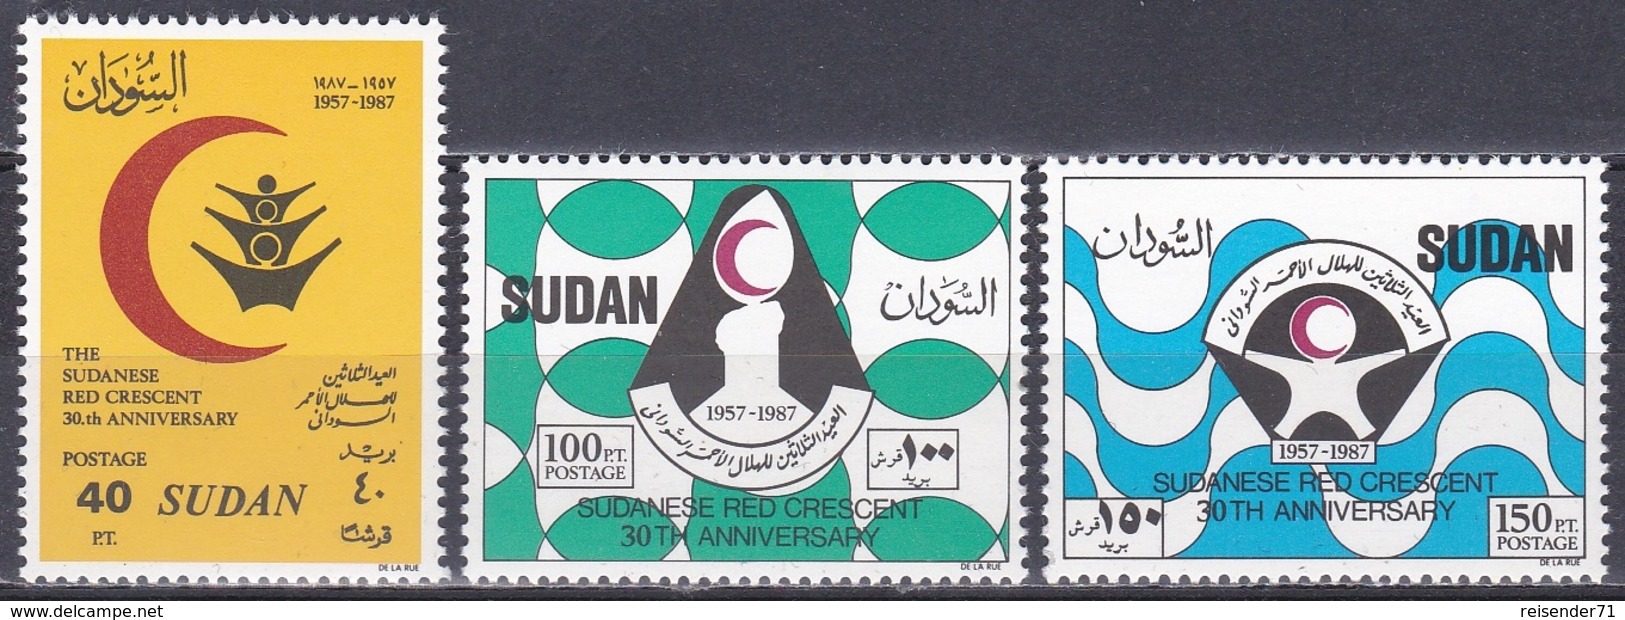 Sudan Soudan 1988 Organisationen Medizin Medicine Erste Hilfe First Aid Roter Halbmond Kerzen Candles, Mi. 395-7 ** - Sudan (1954-...)